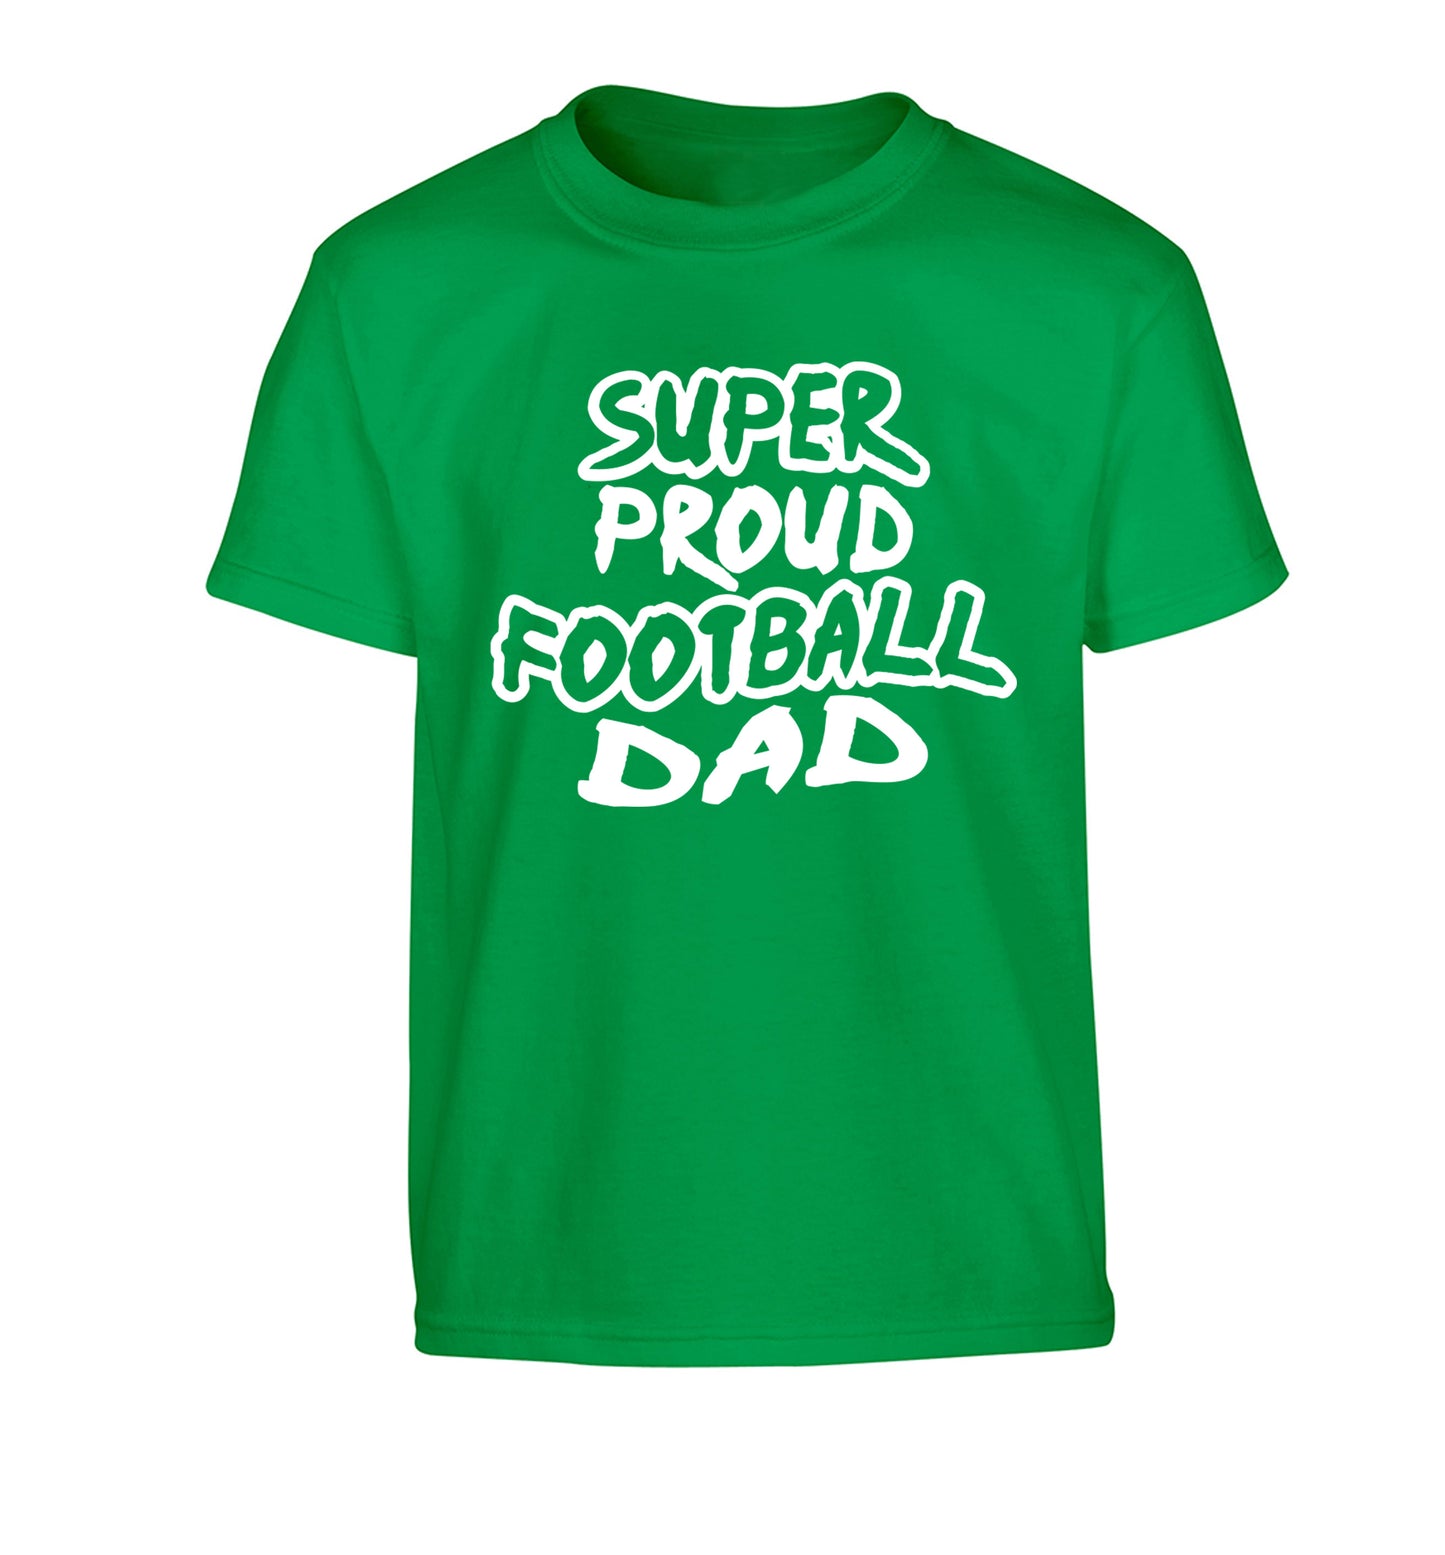 Super proud football dad Children's green Tshirt 12-14 Years